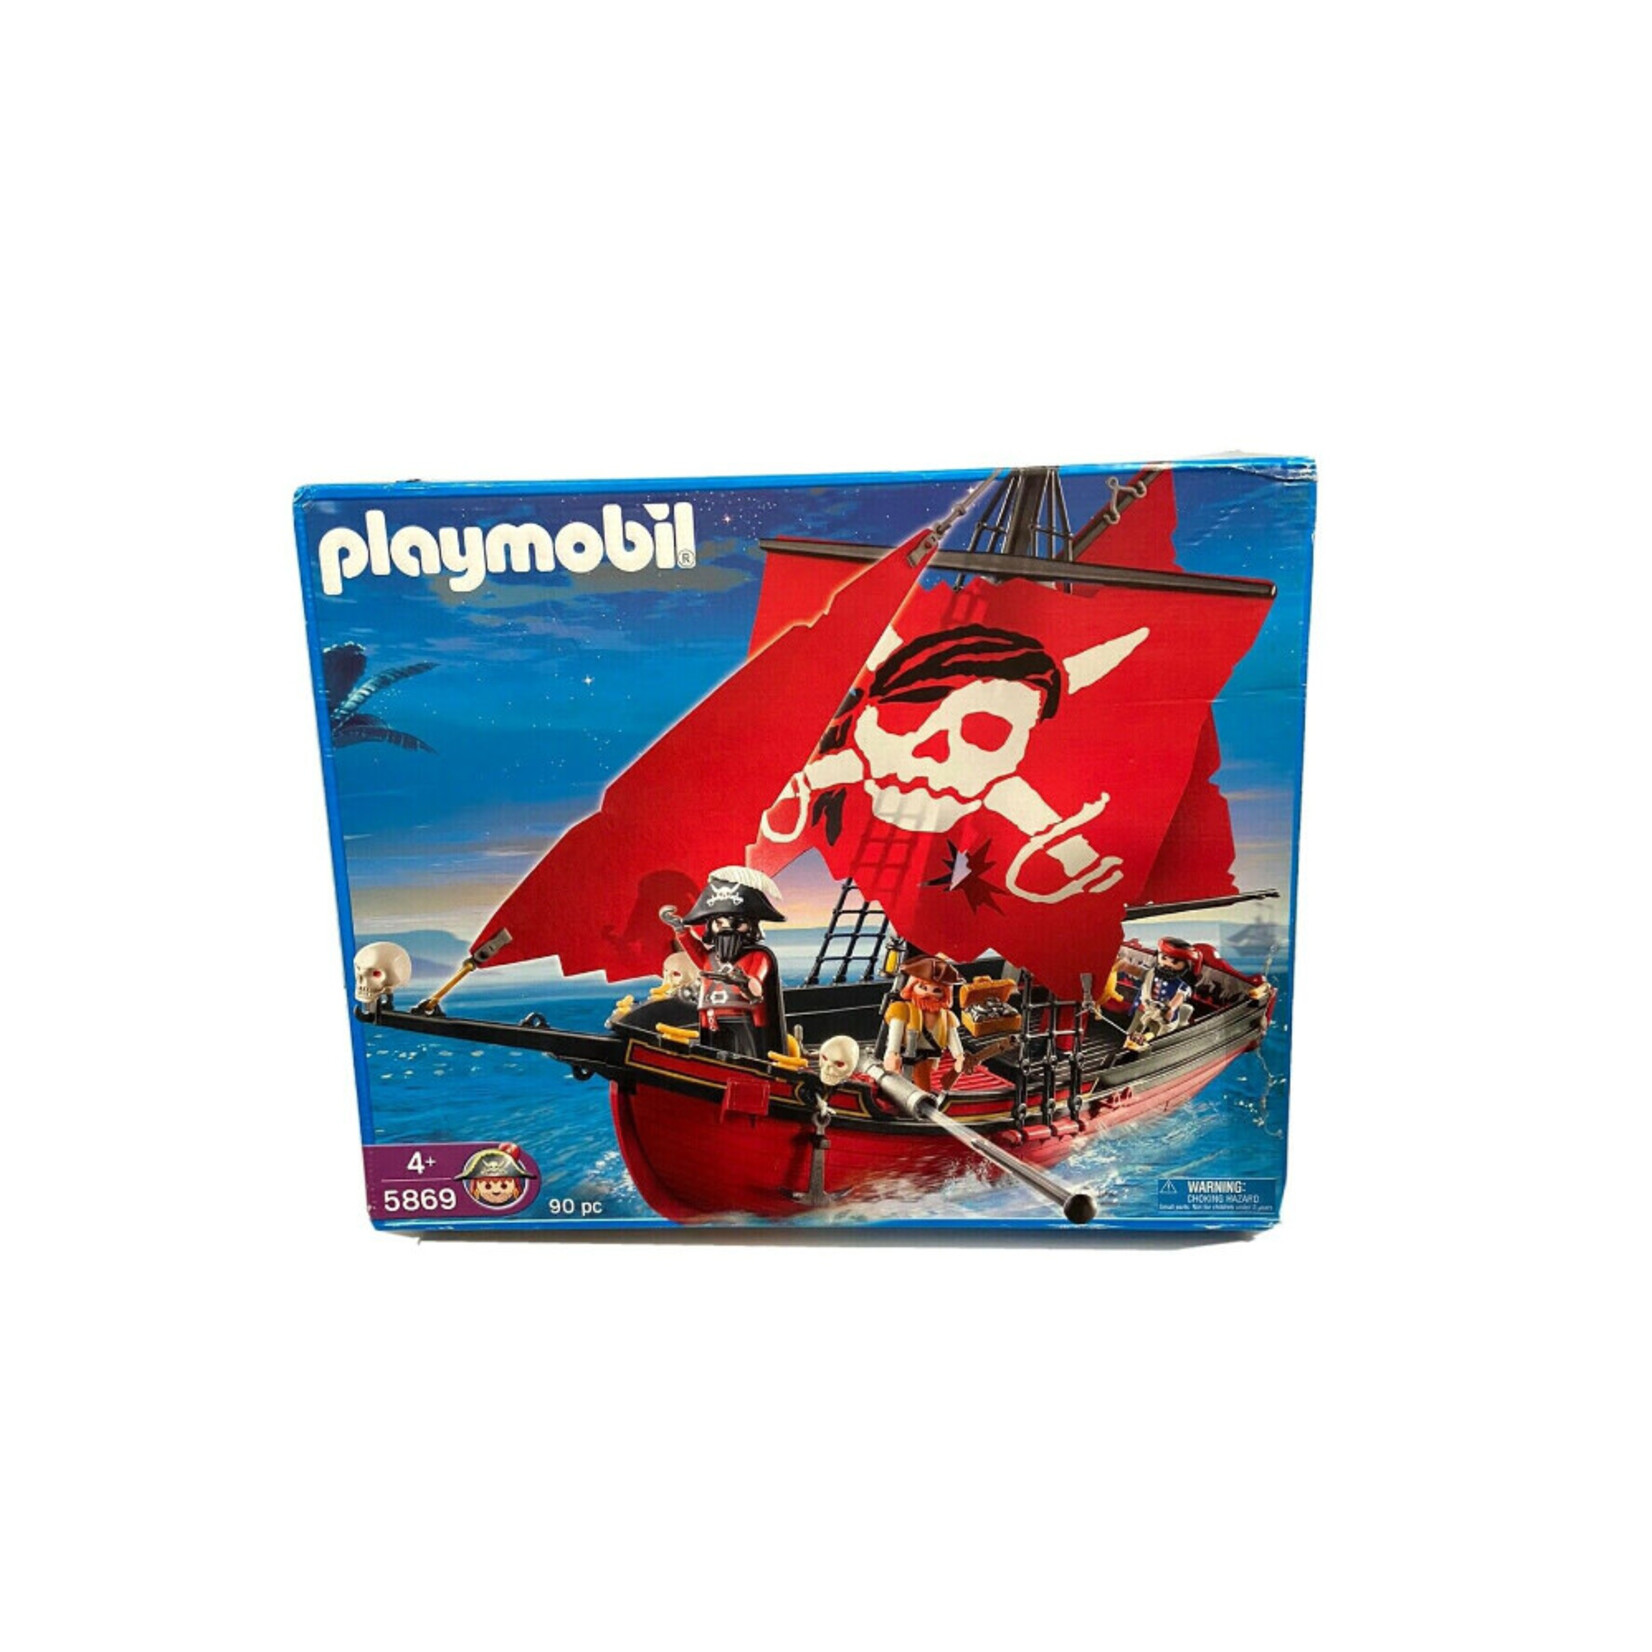 PLAYMOBIL PLAYMOBIL SET 5869 RED BANNER PIRATE SHIP